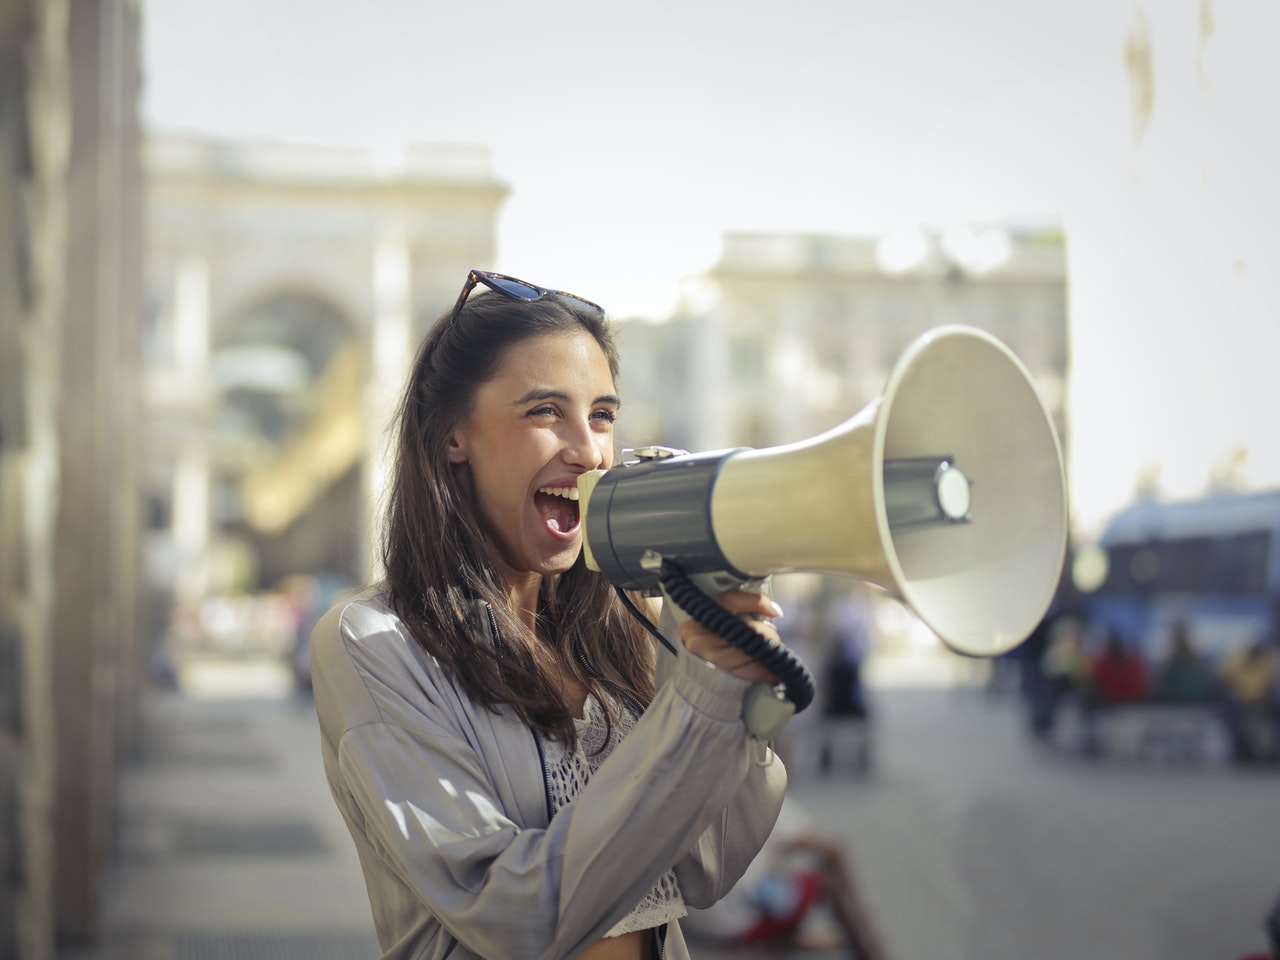 A young woman shouts into a megaphone